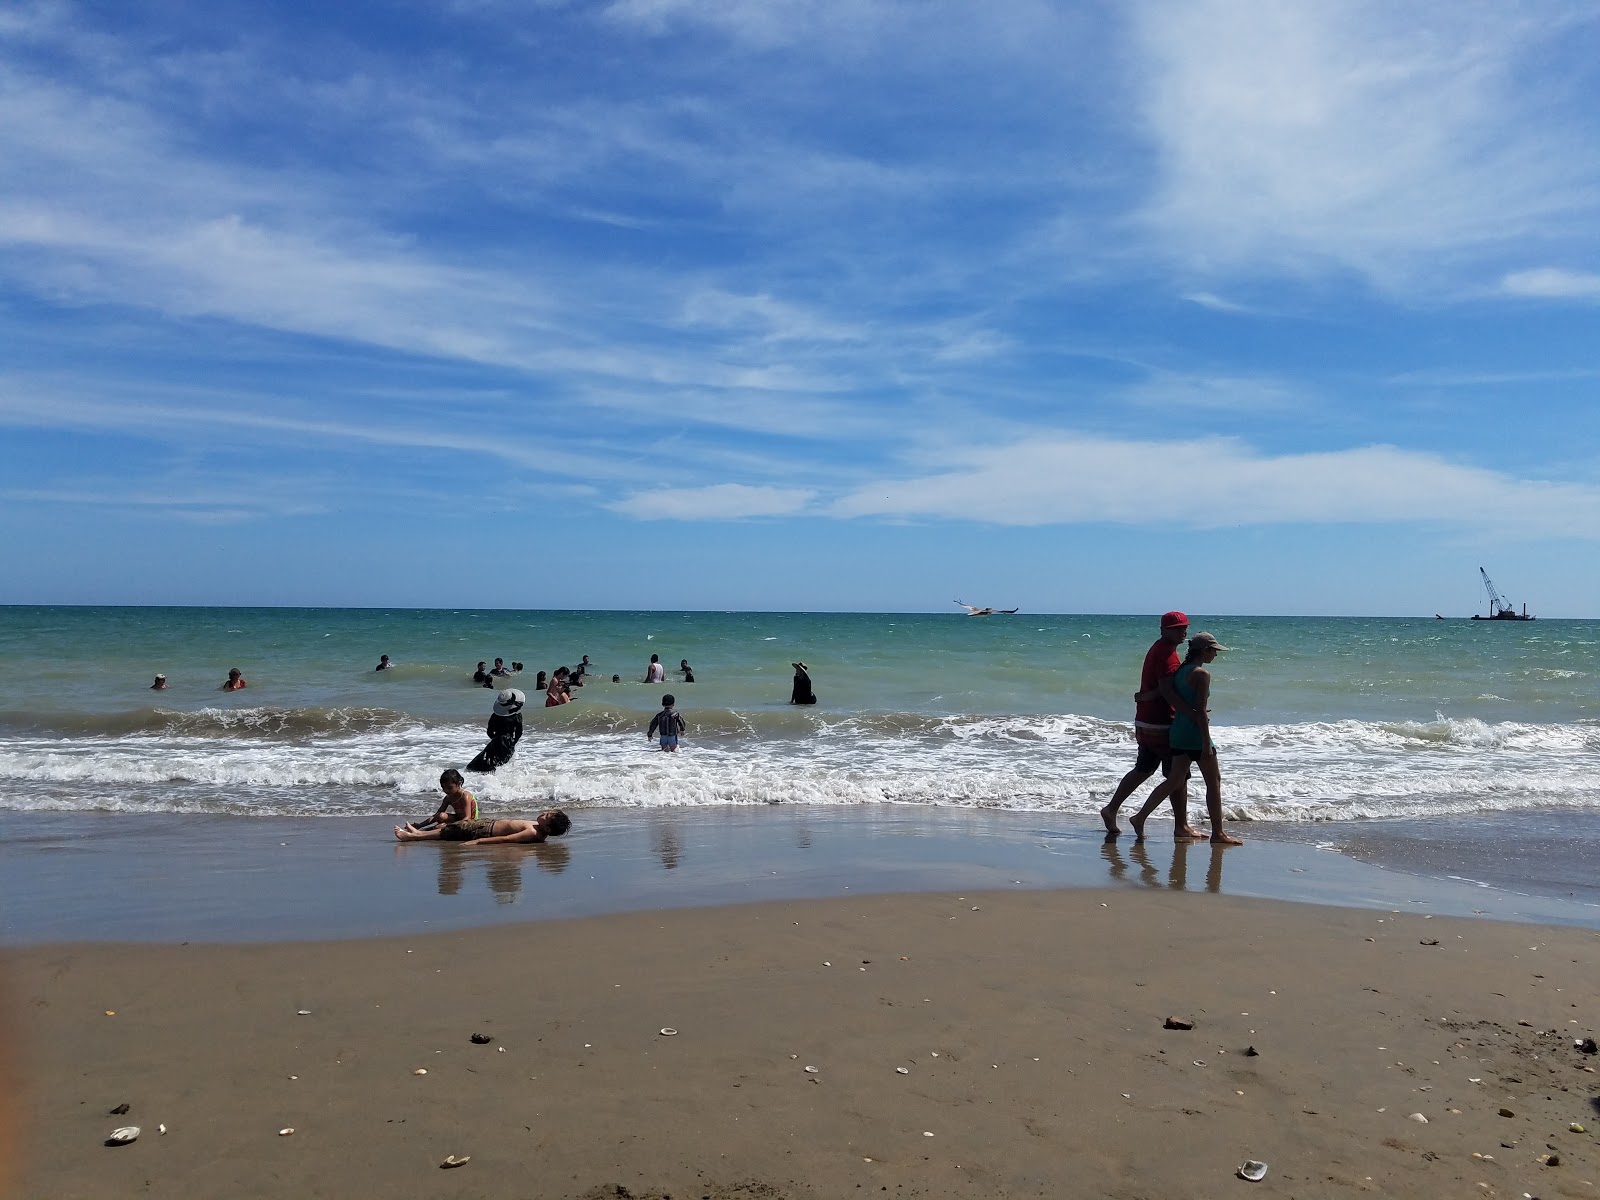 Fotografie cu El Cochorit beach cu nivelul de curățenie in medie